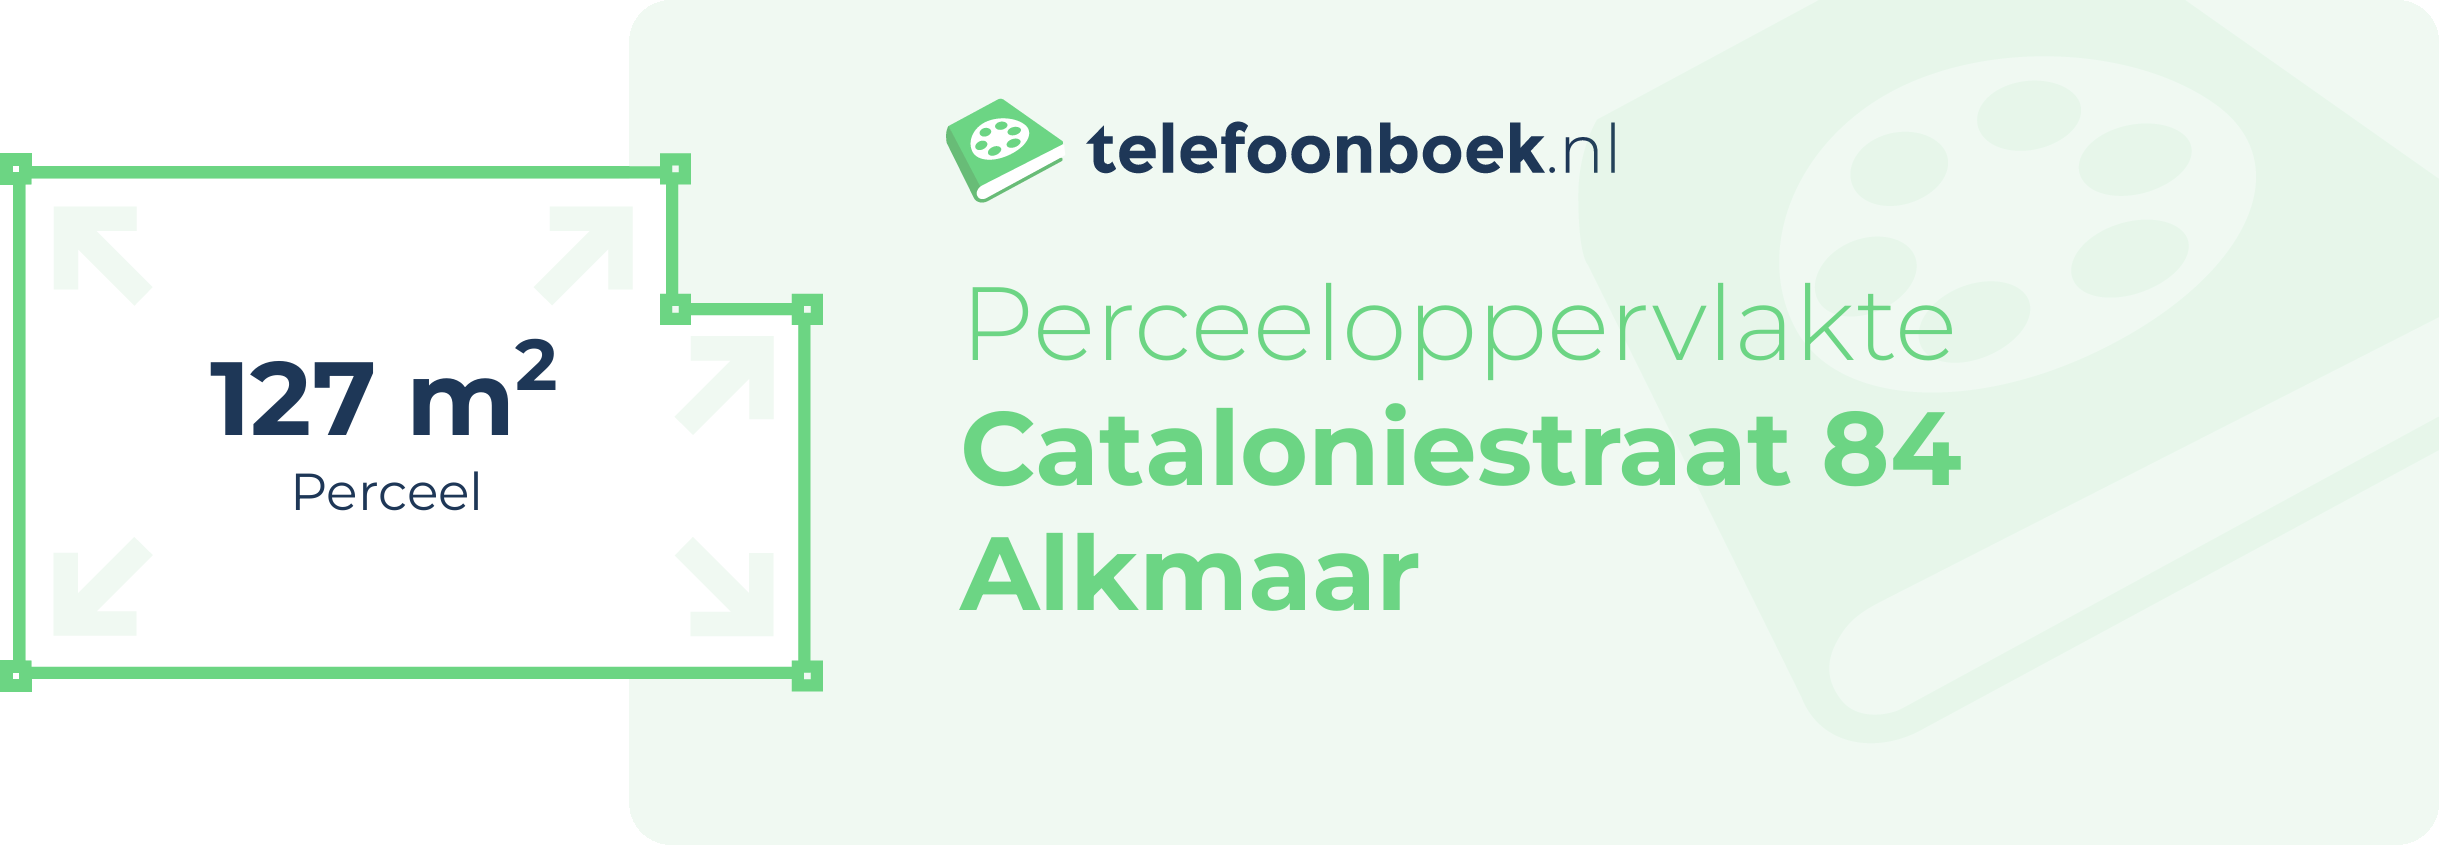 Perceeloppervlakte Cataloniestraat 84 Alkmaar